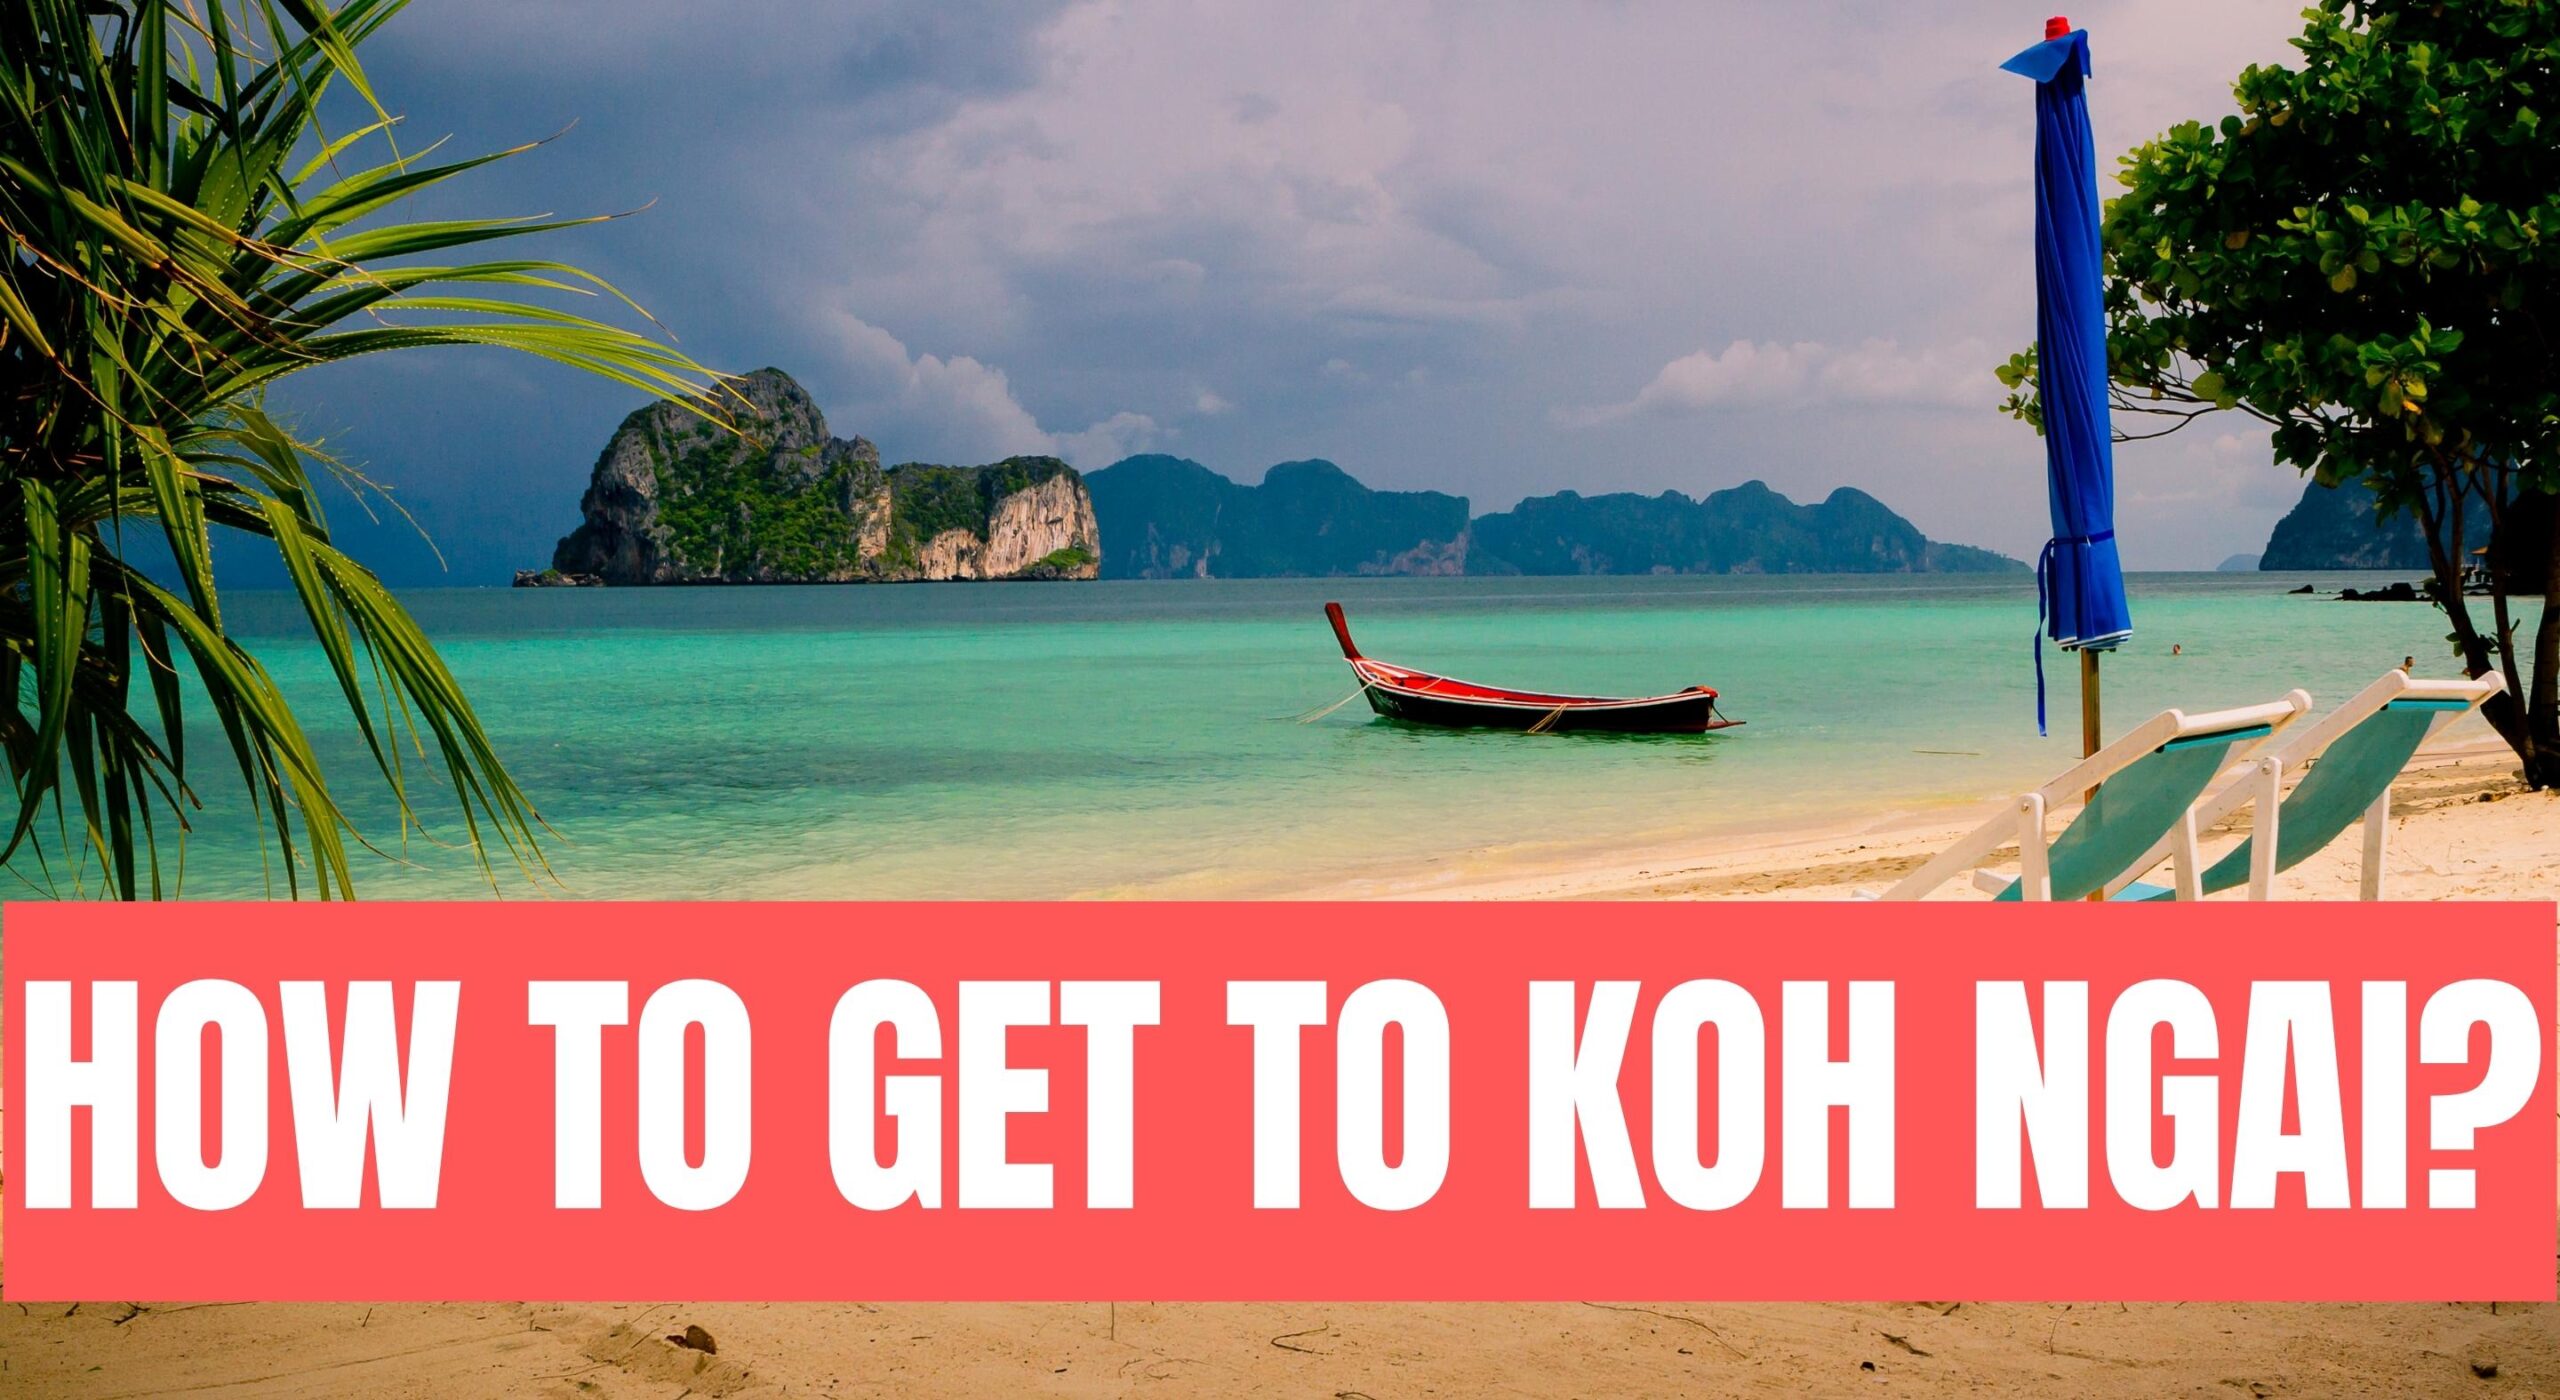 How To Get To Koh Ngai?